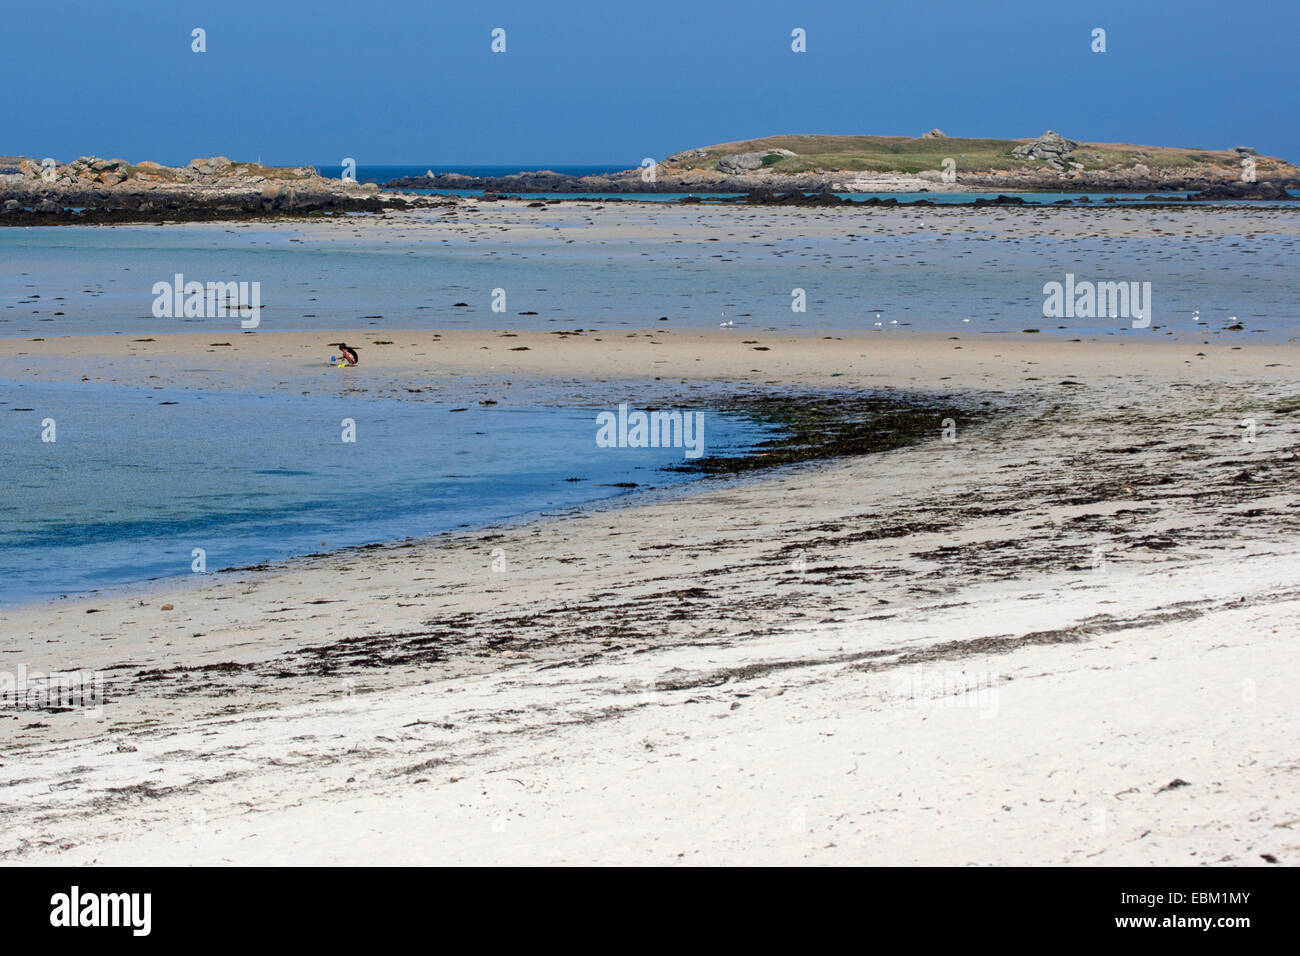 beach segment at low tide, France, Brittany, Atlantic Ocean Stock Photo